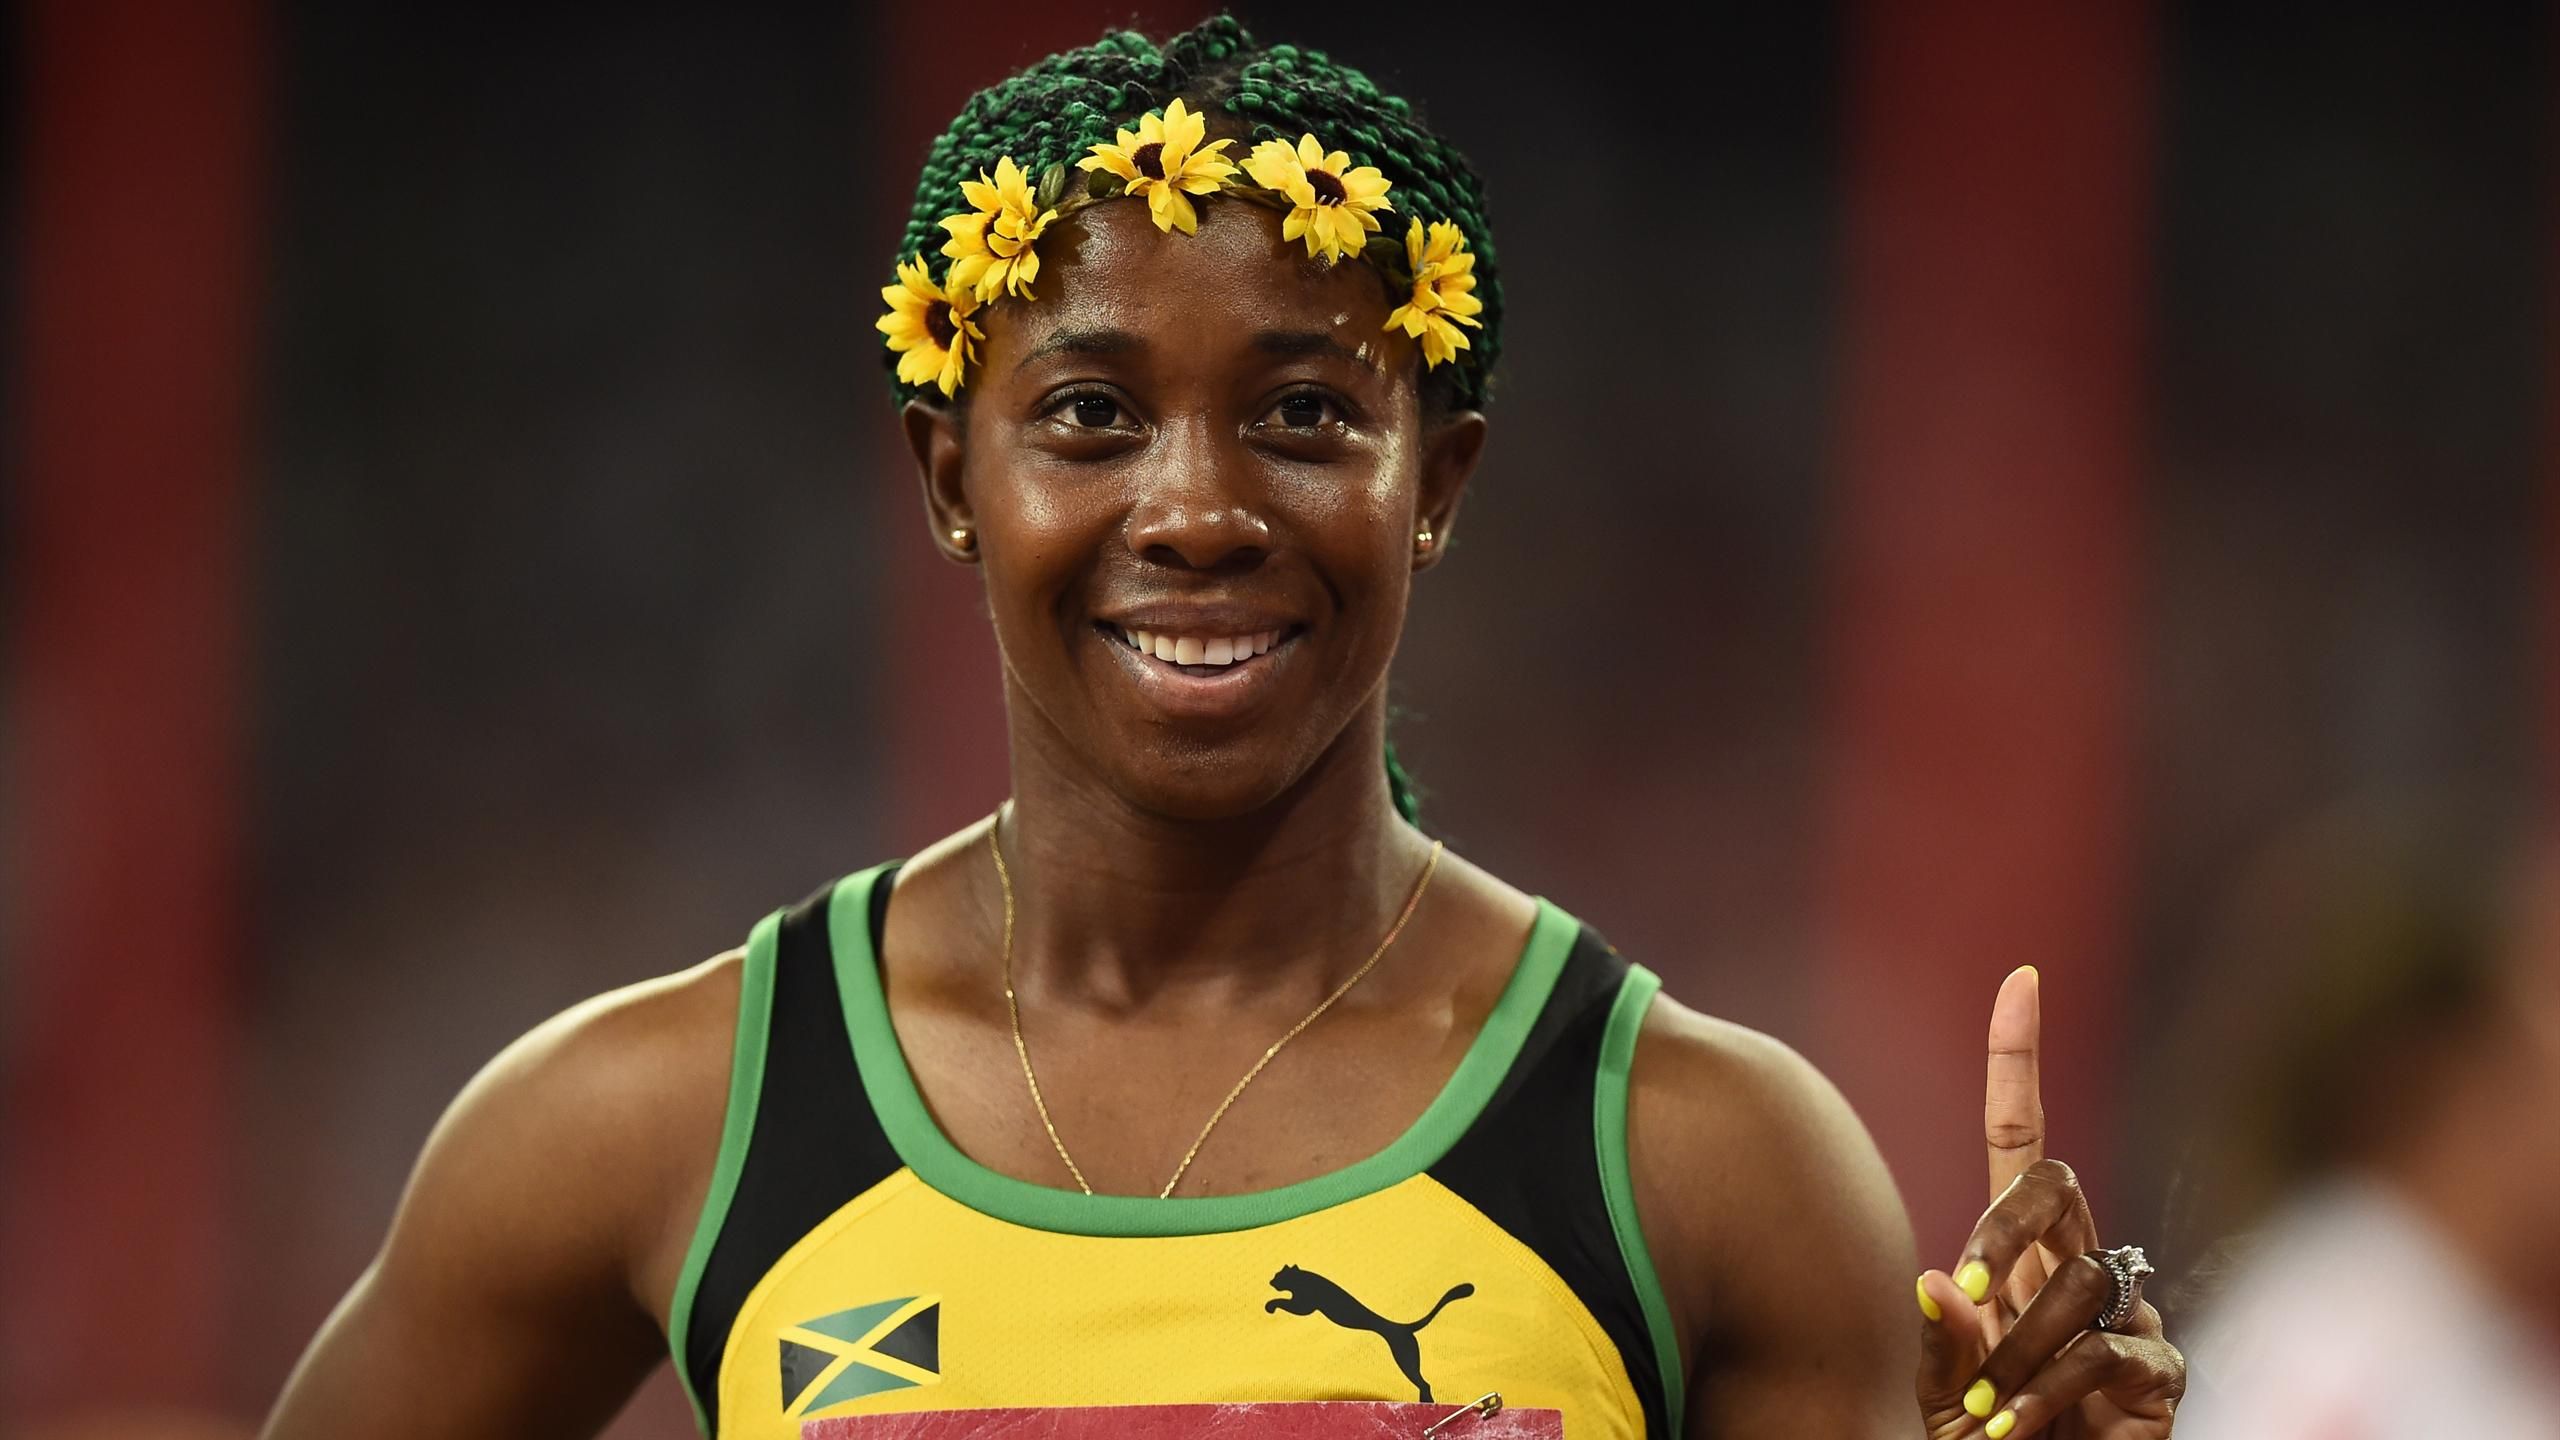 2015 world championships in athletics – women's 100 metres